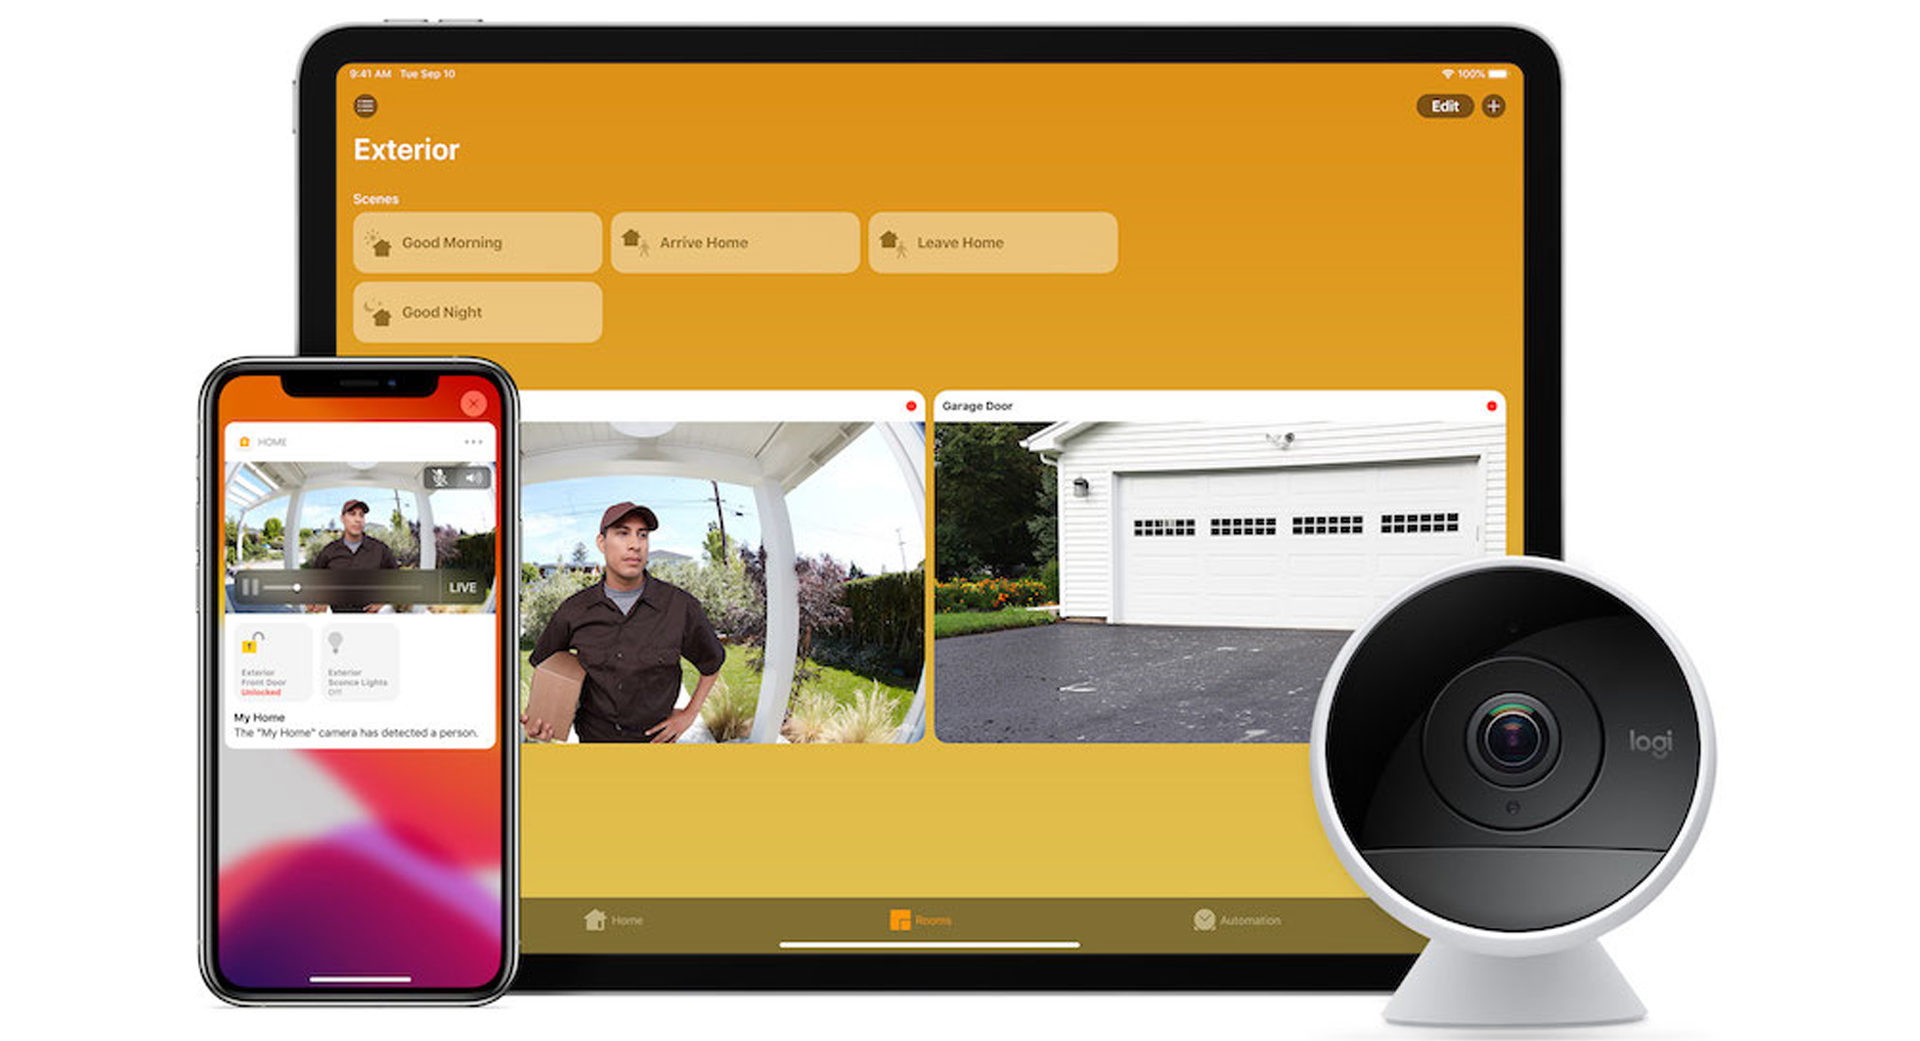 HomeKit Secure Video on an iPad and iPhone